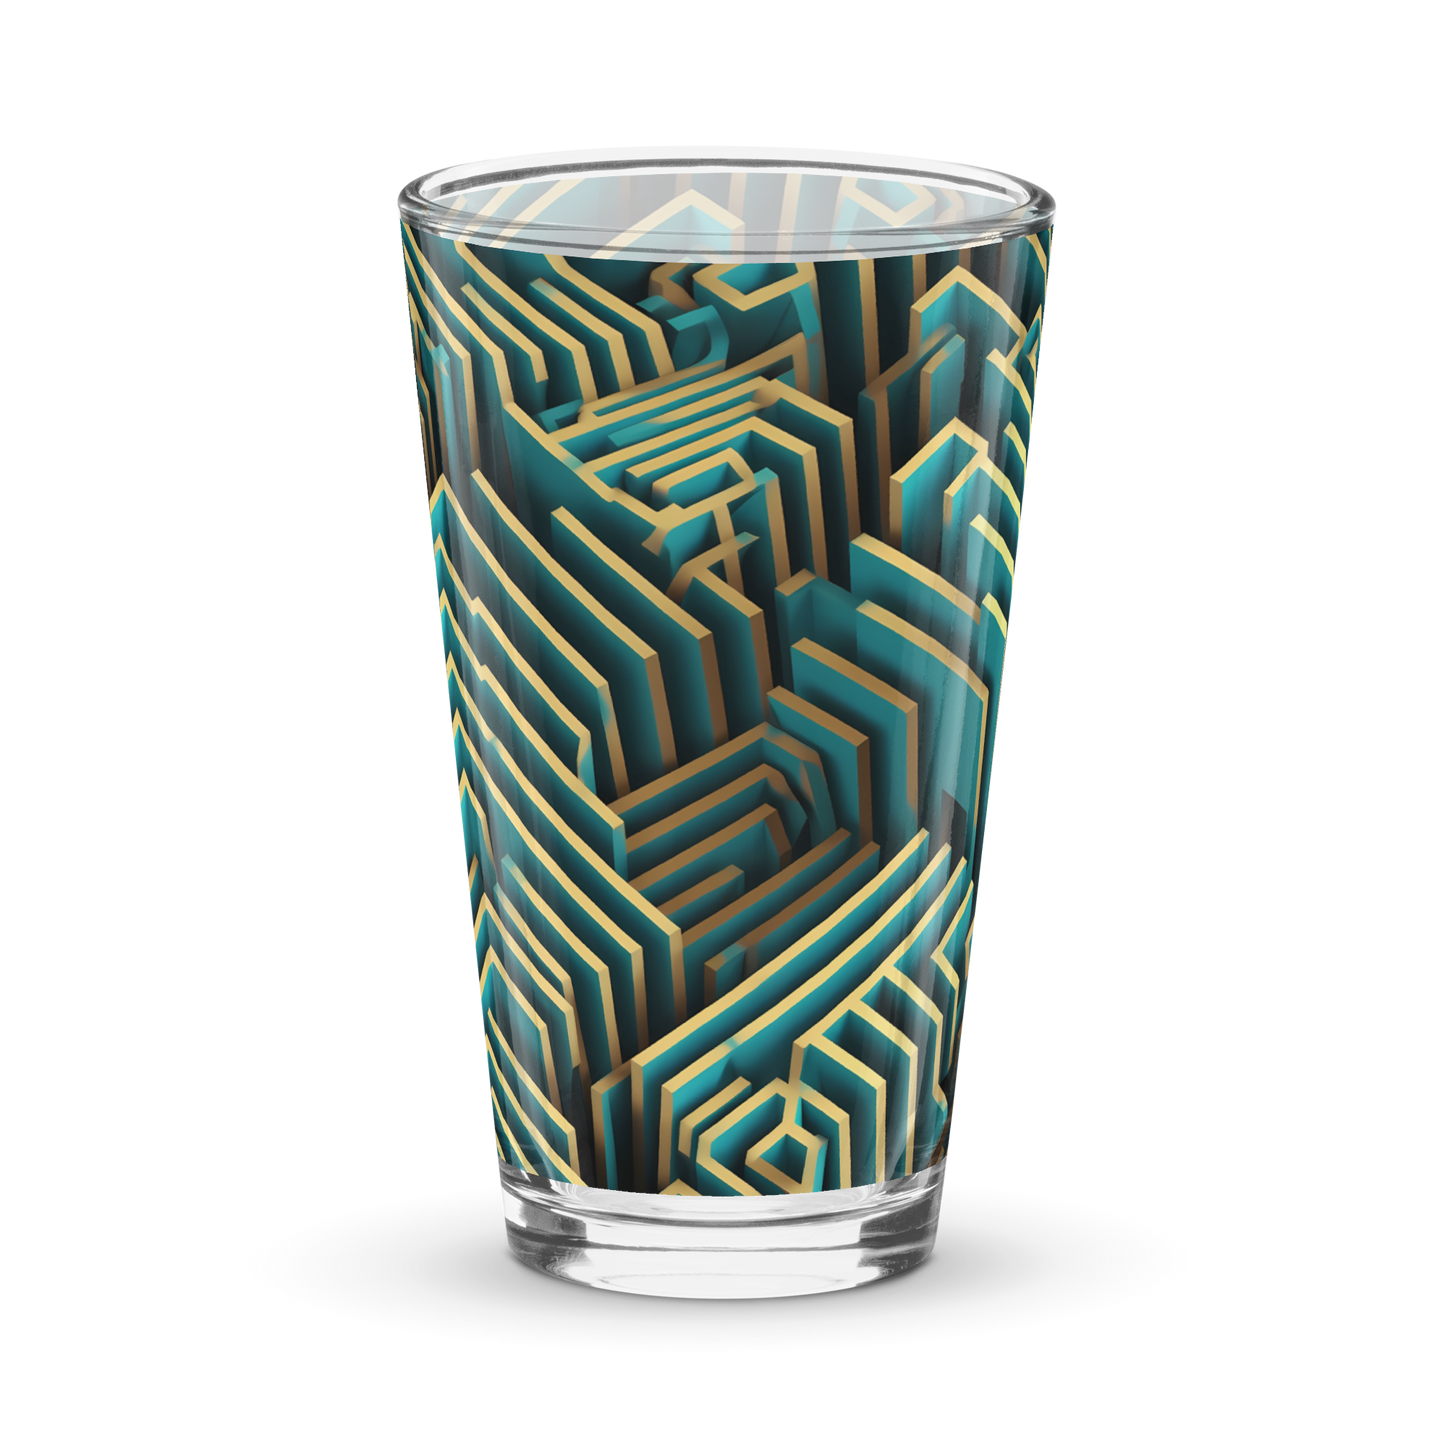 3D Maze Illusion | 3D Patterns | Shaker Pint Glass (16 oz) - #5